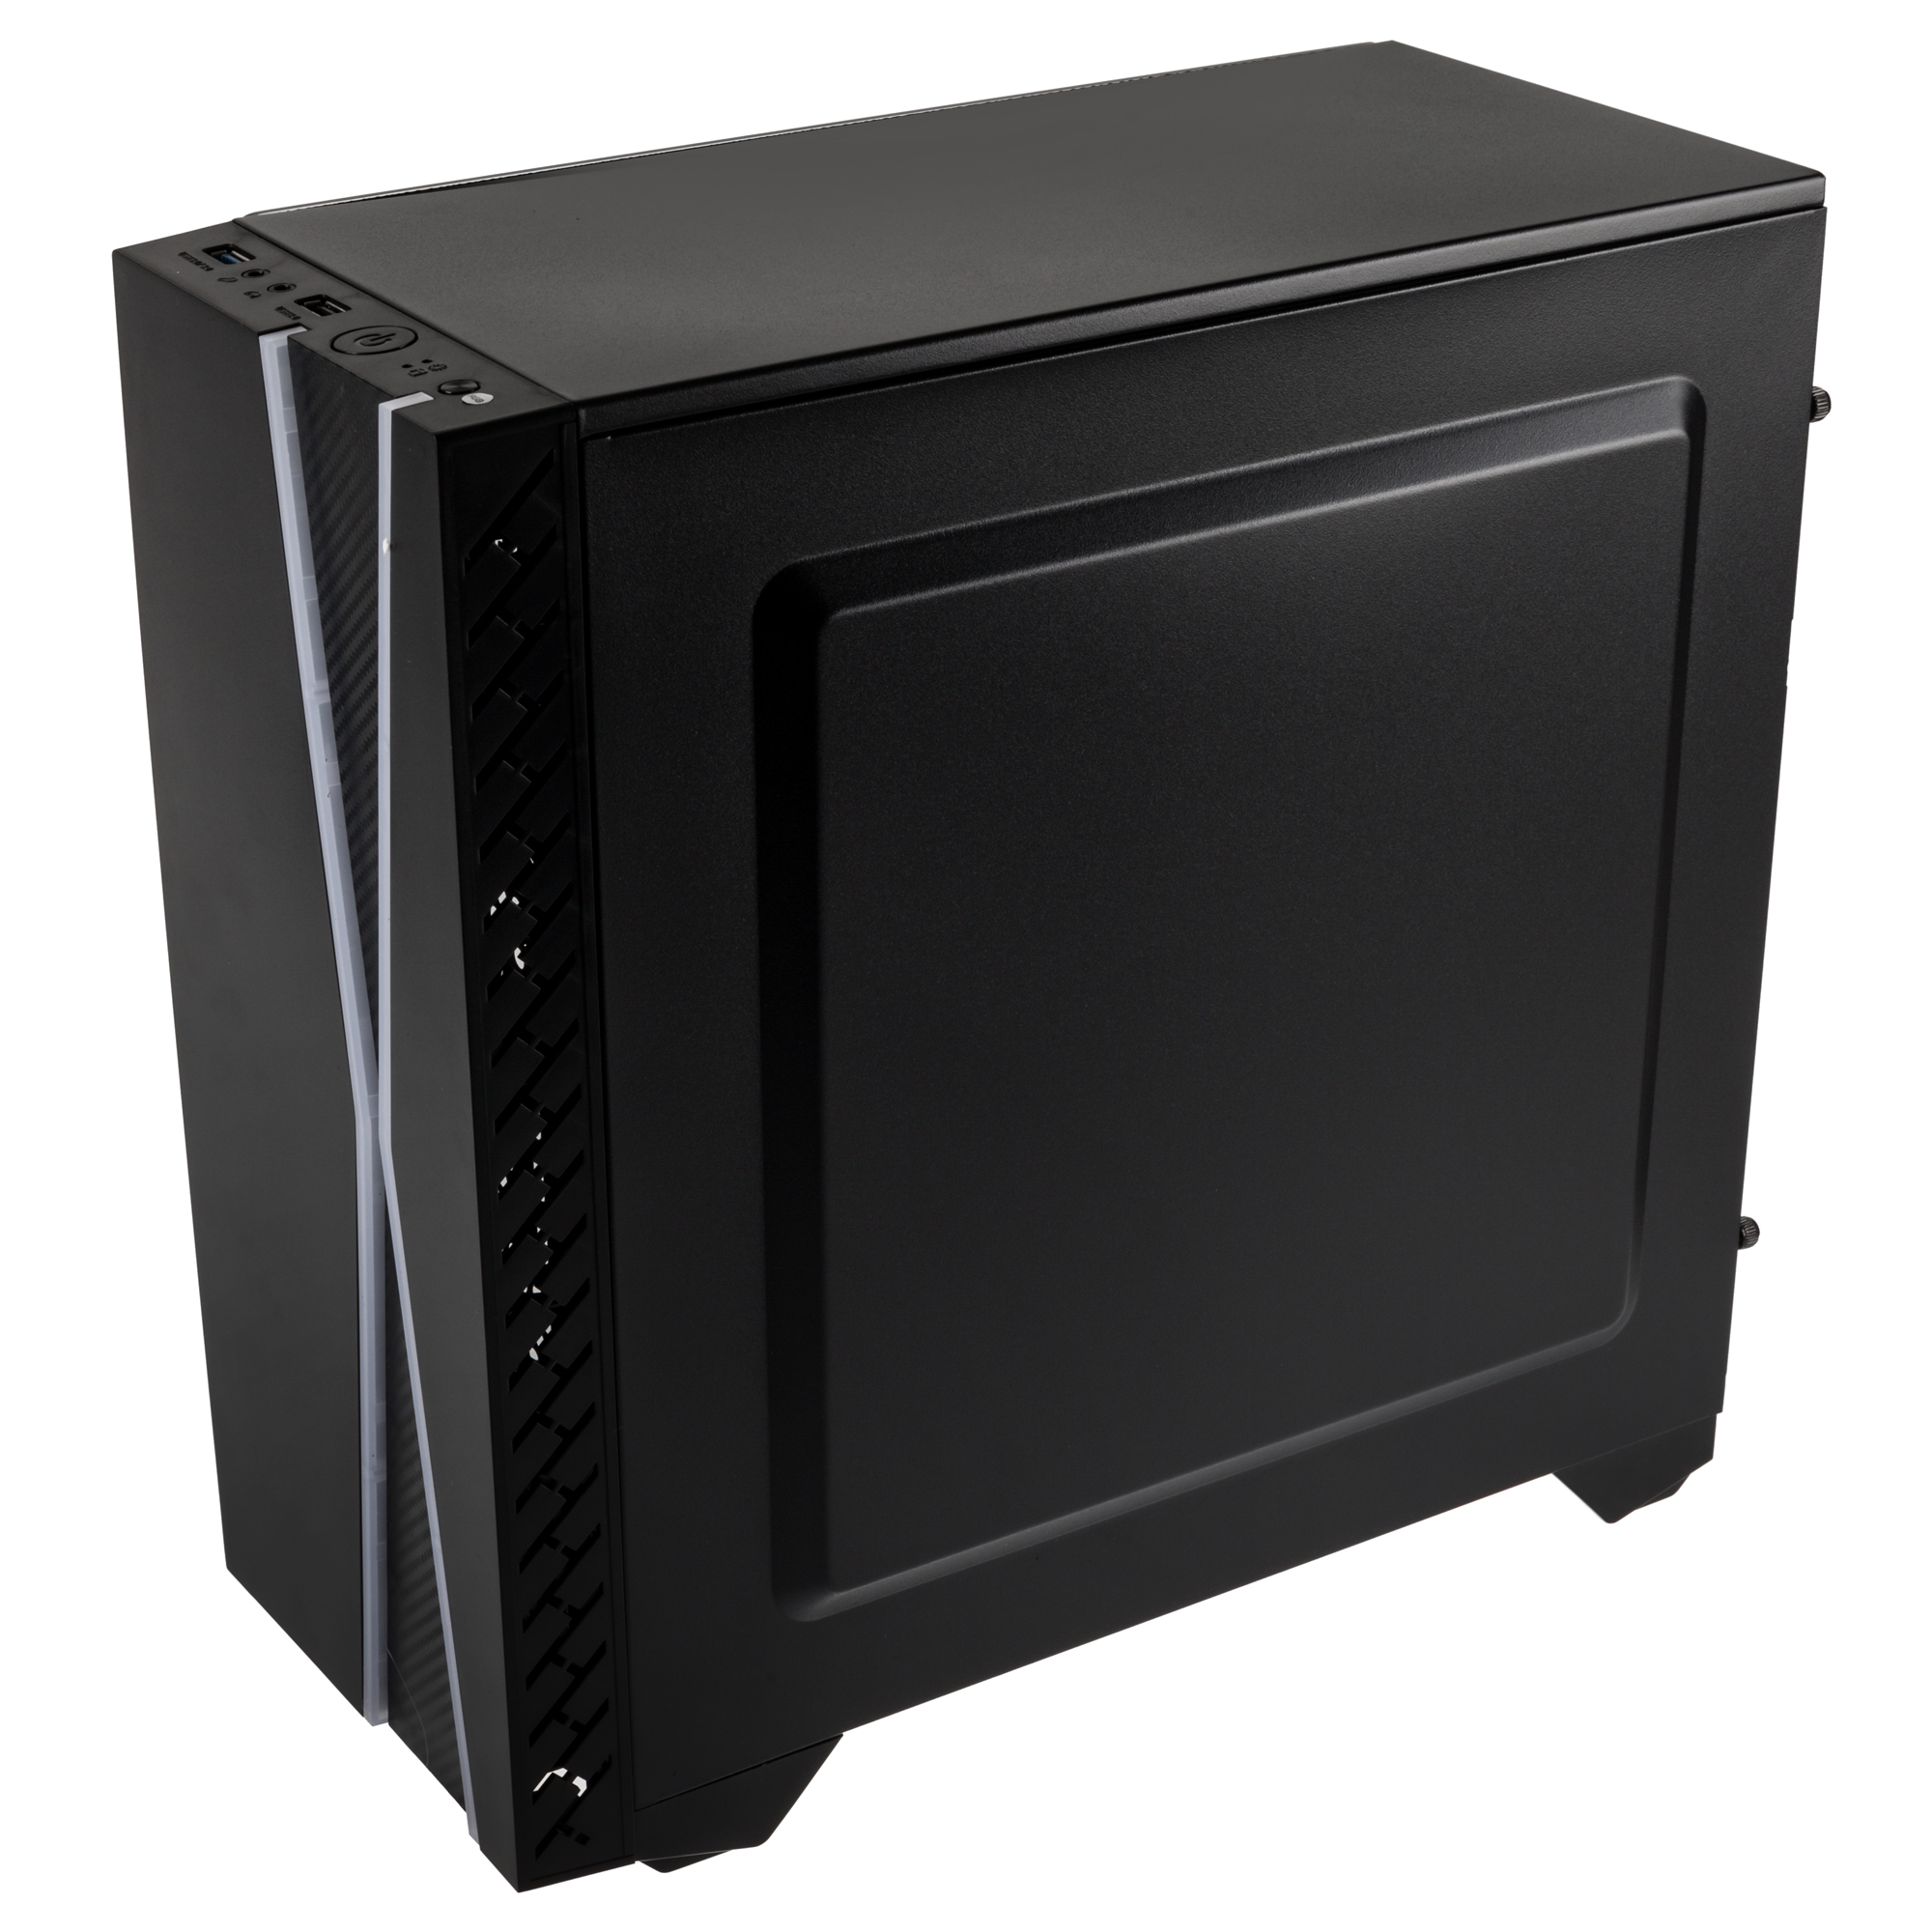 Kolink - Kolink Inspire Series K3 ARGB Micro-ATX Case - Black Window